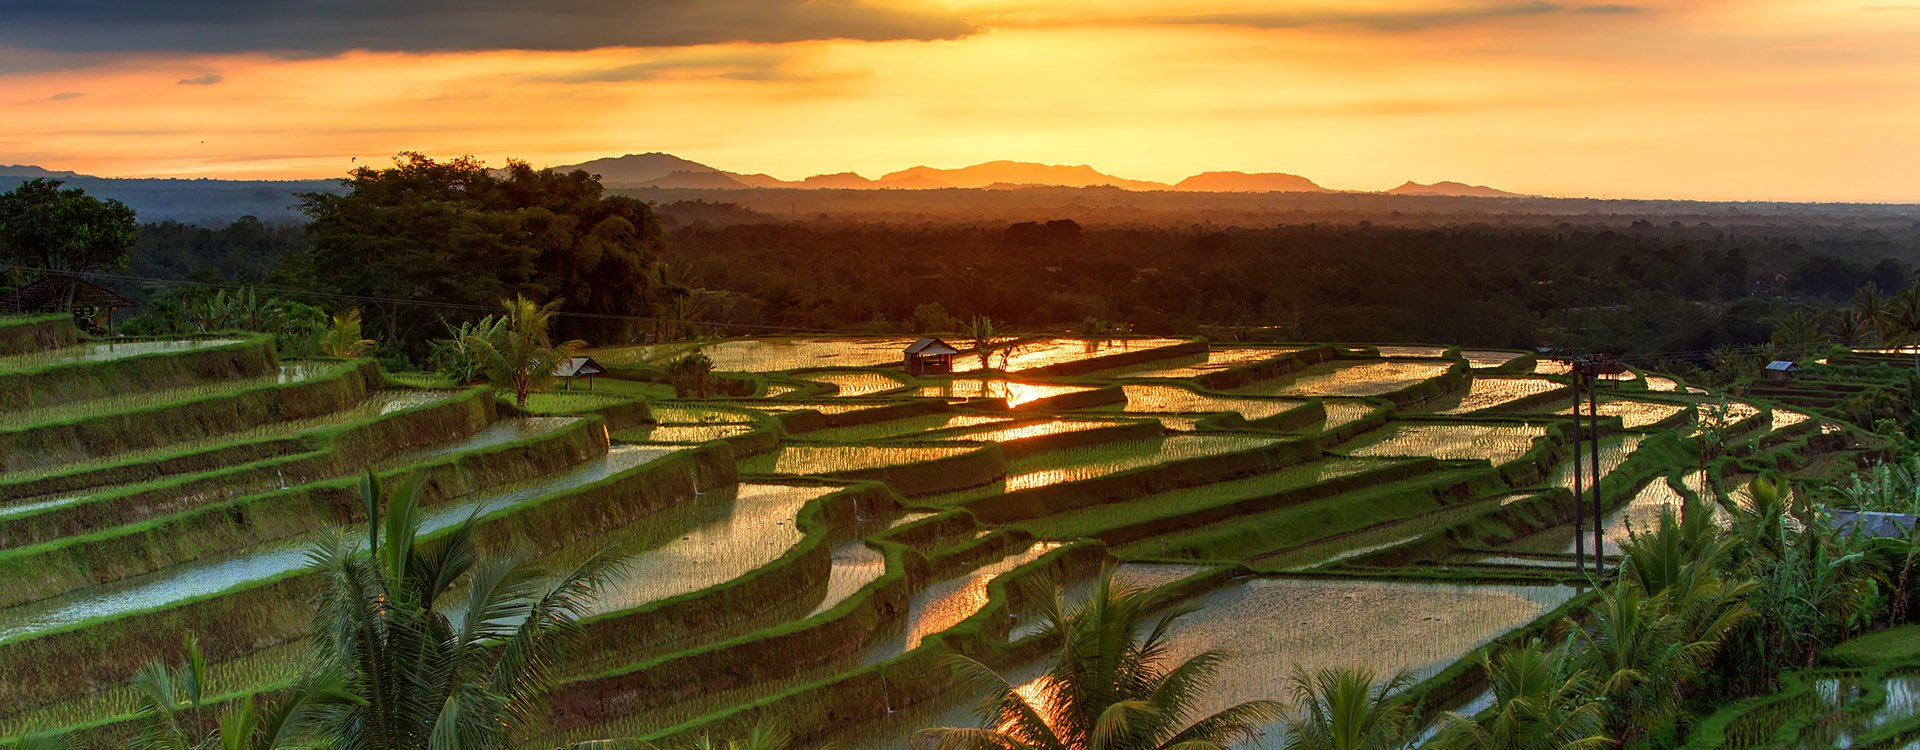 Jatiluwih Rice terraces on Bali during sunrise, Indonesia